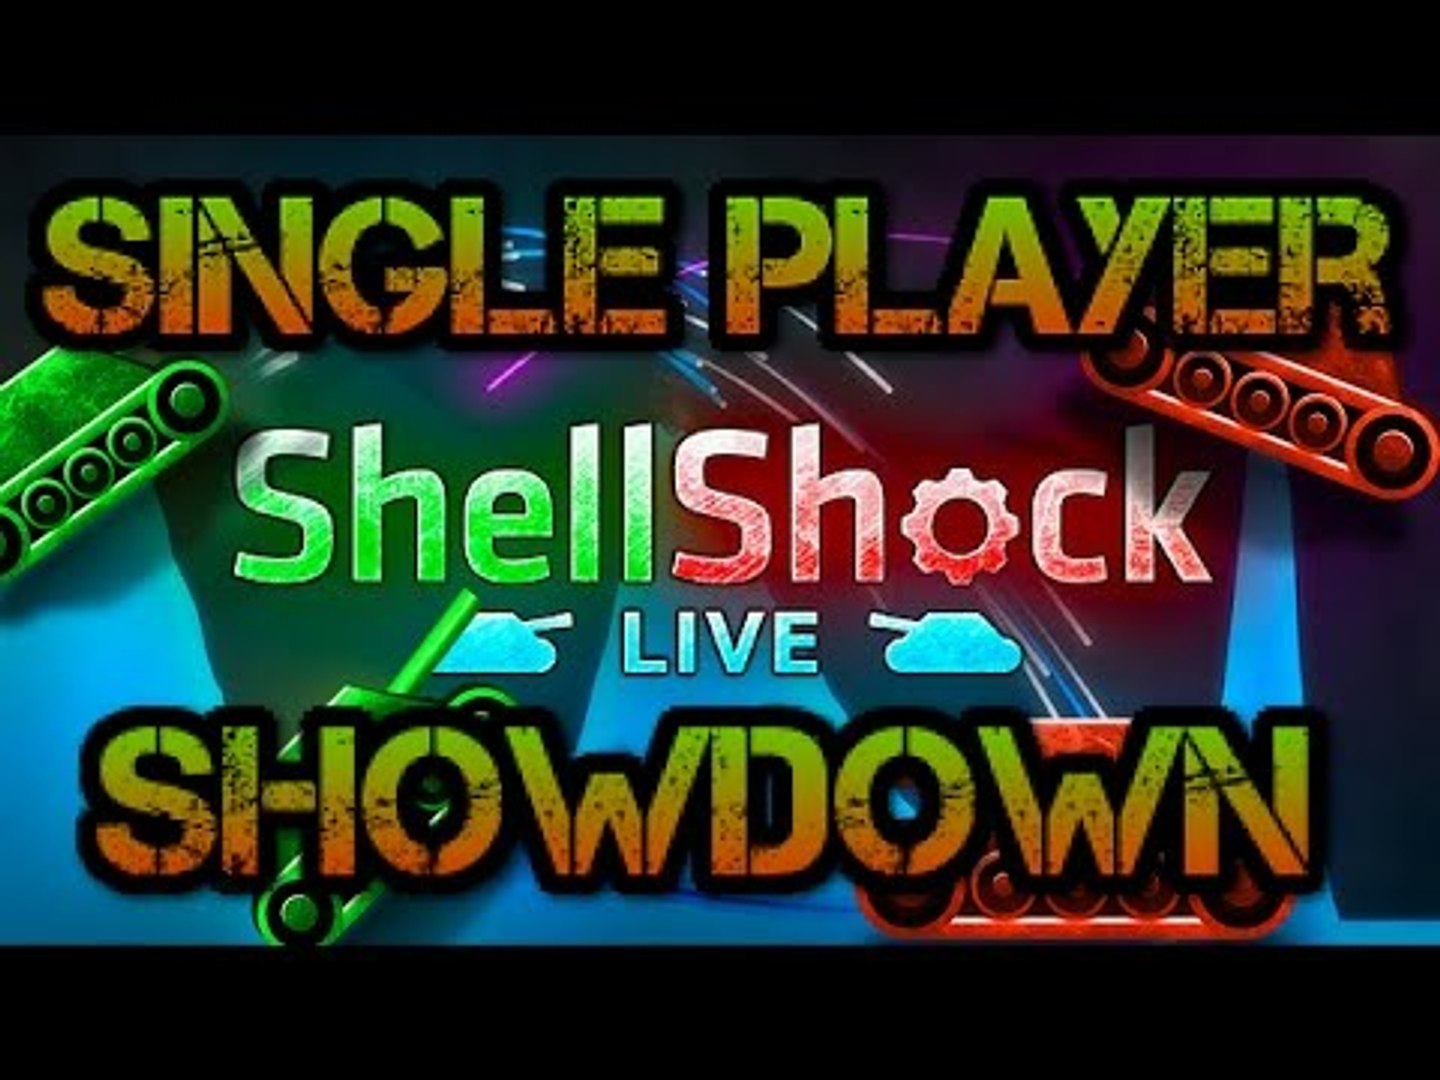 Steam Community :: Guide :: ShellShock Live - Complete Mission Guide